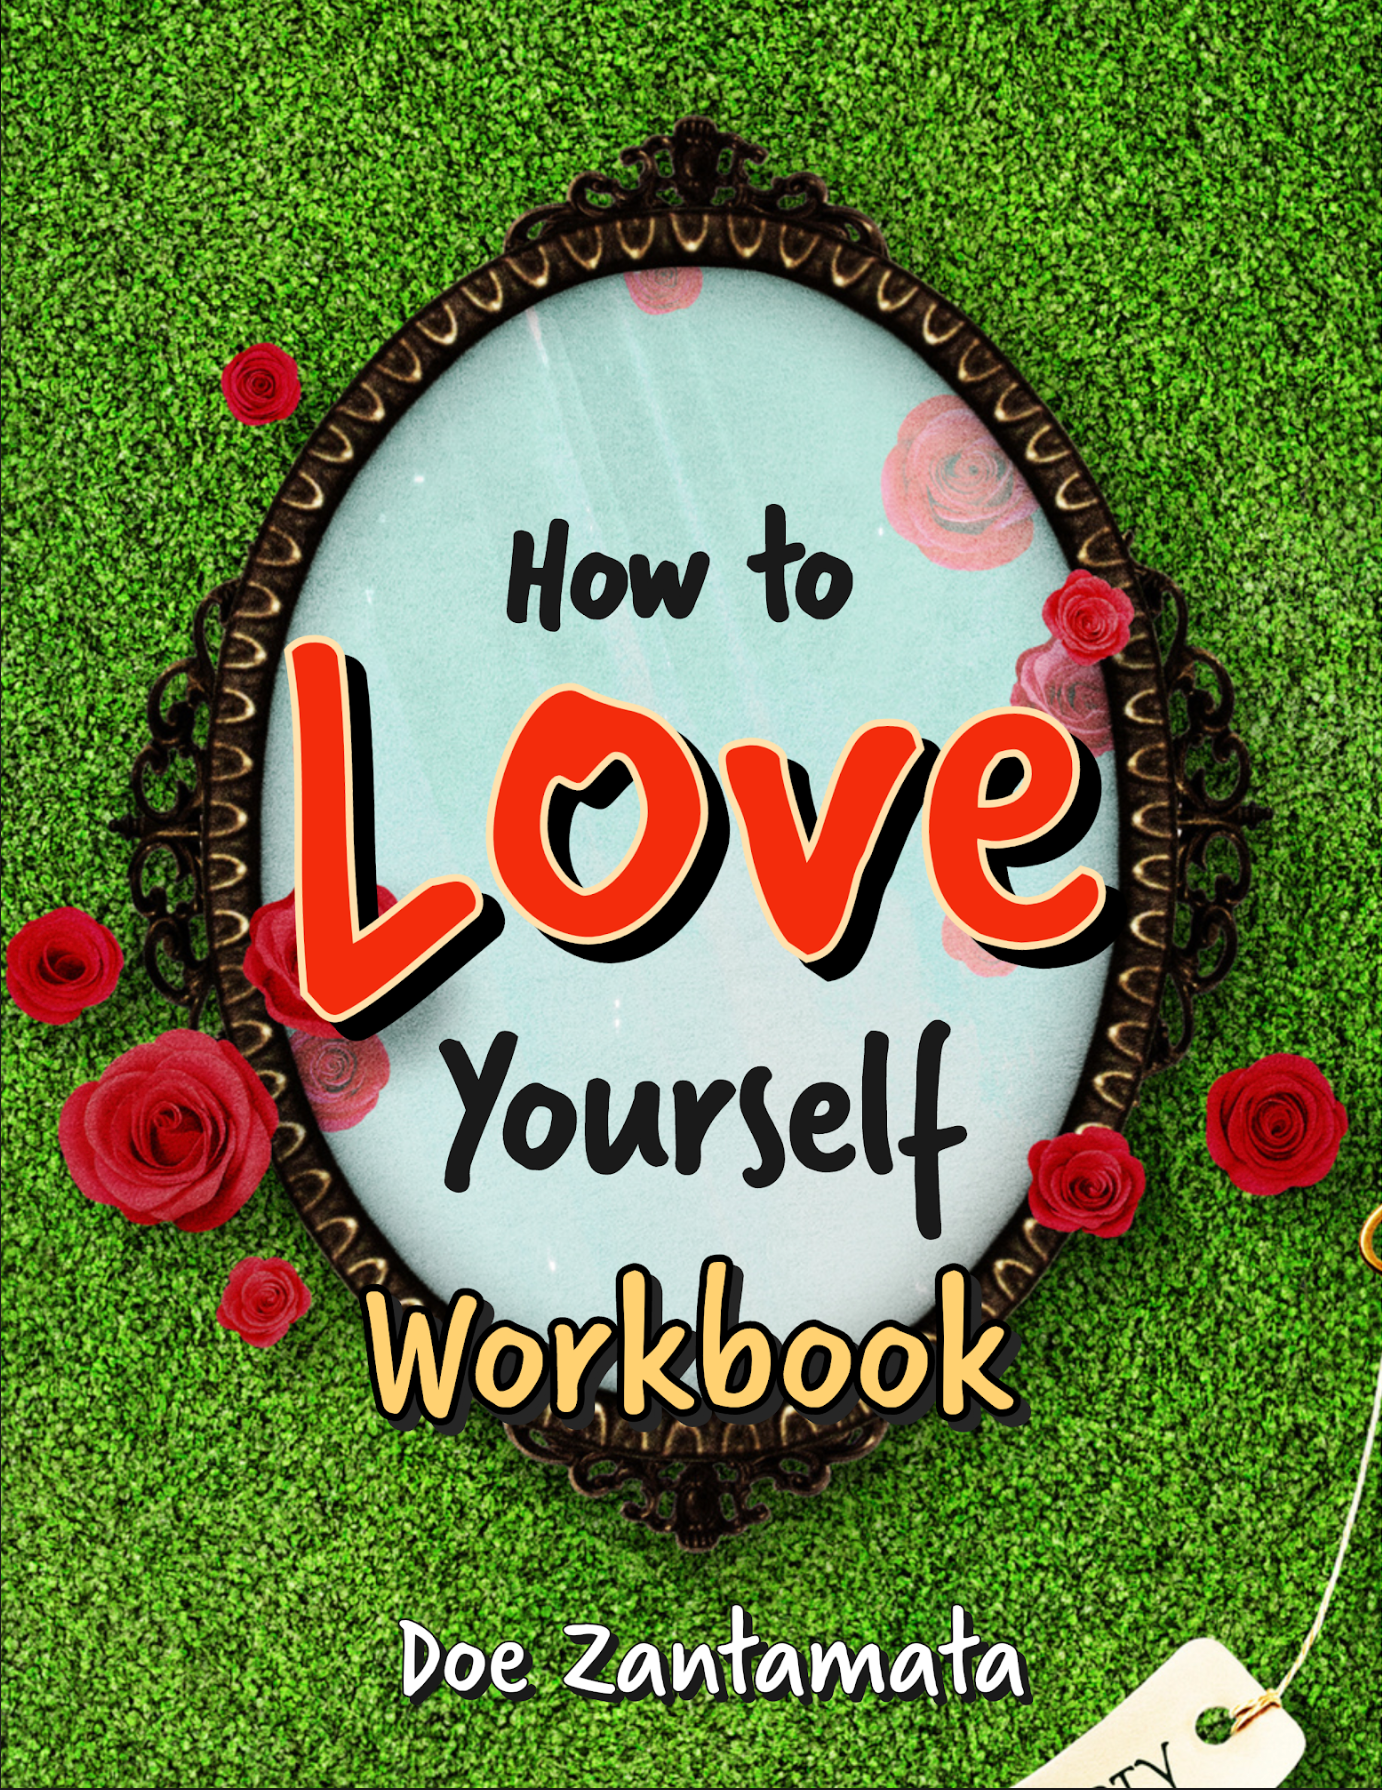 How to Love Yourself Workbook by Doe Zantamata